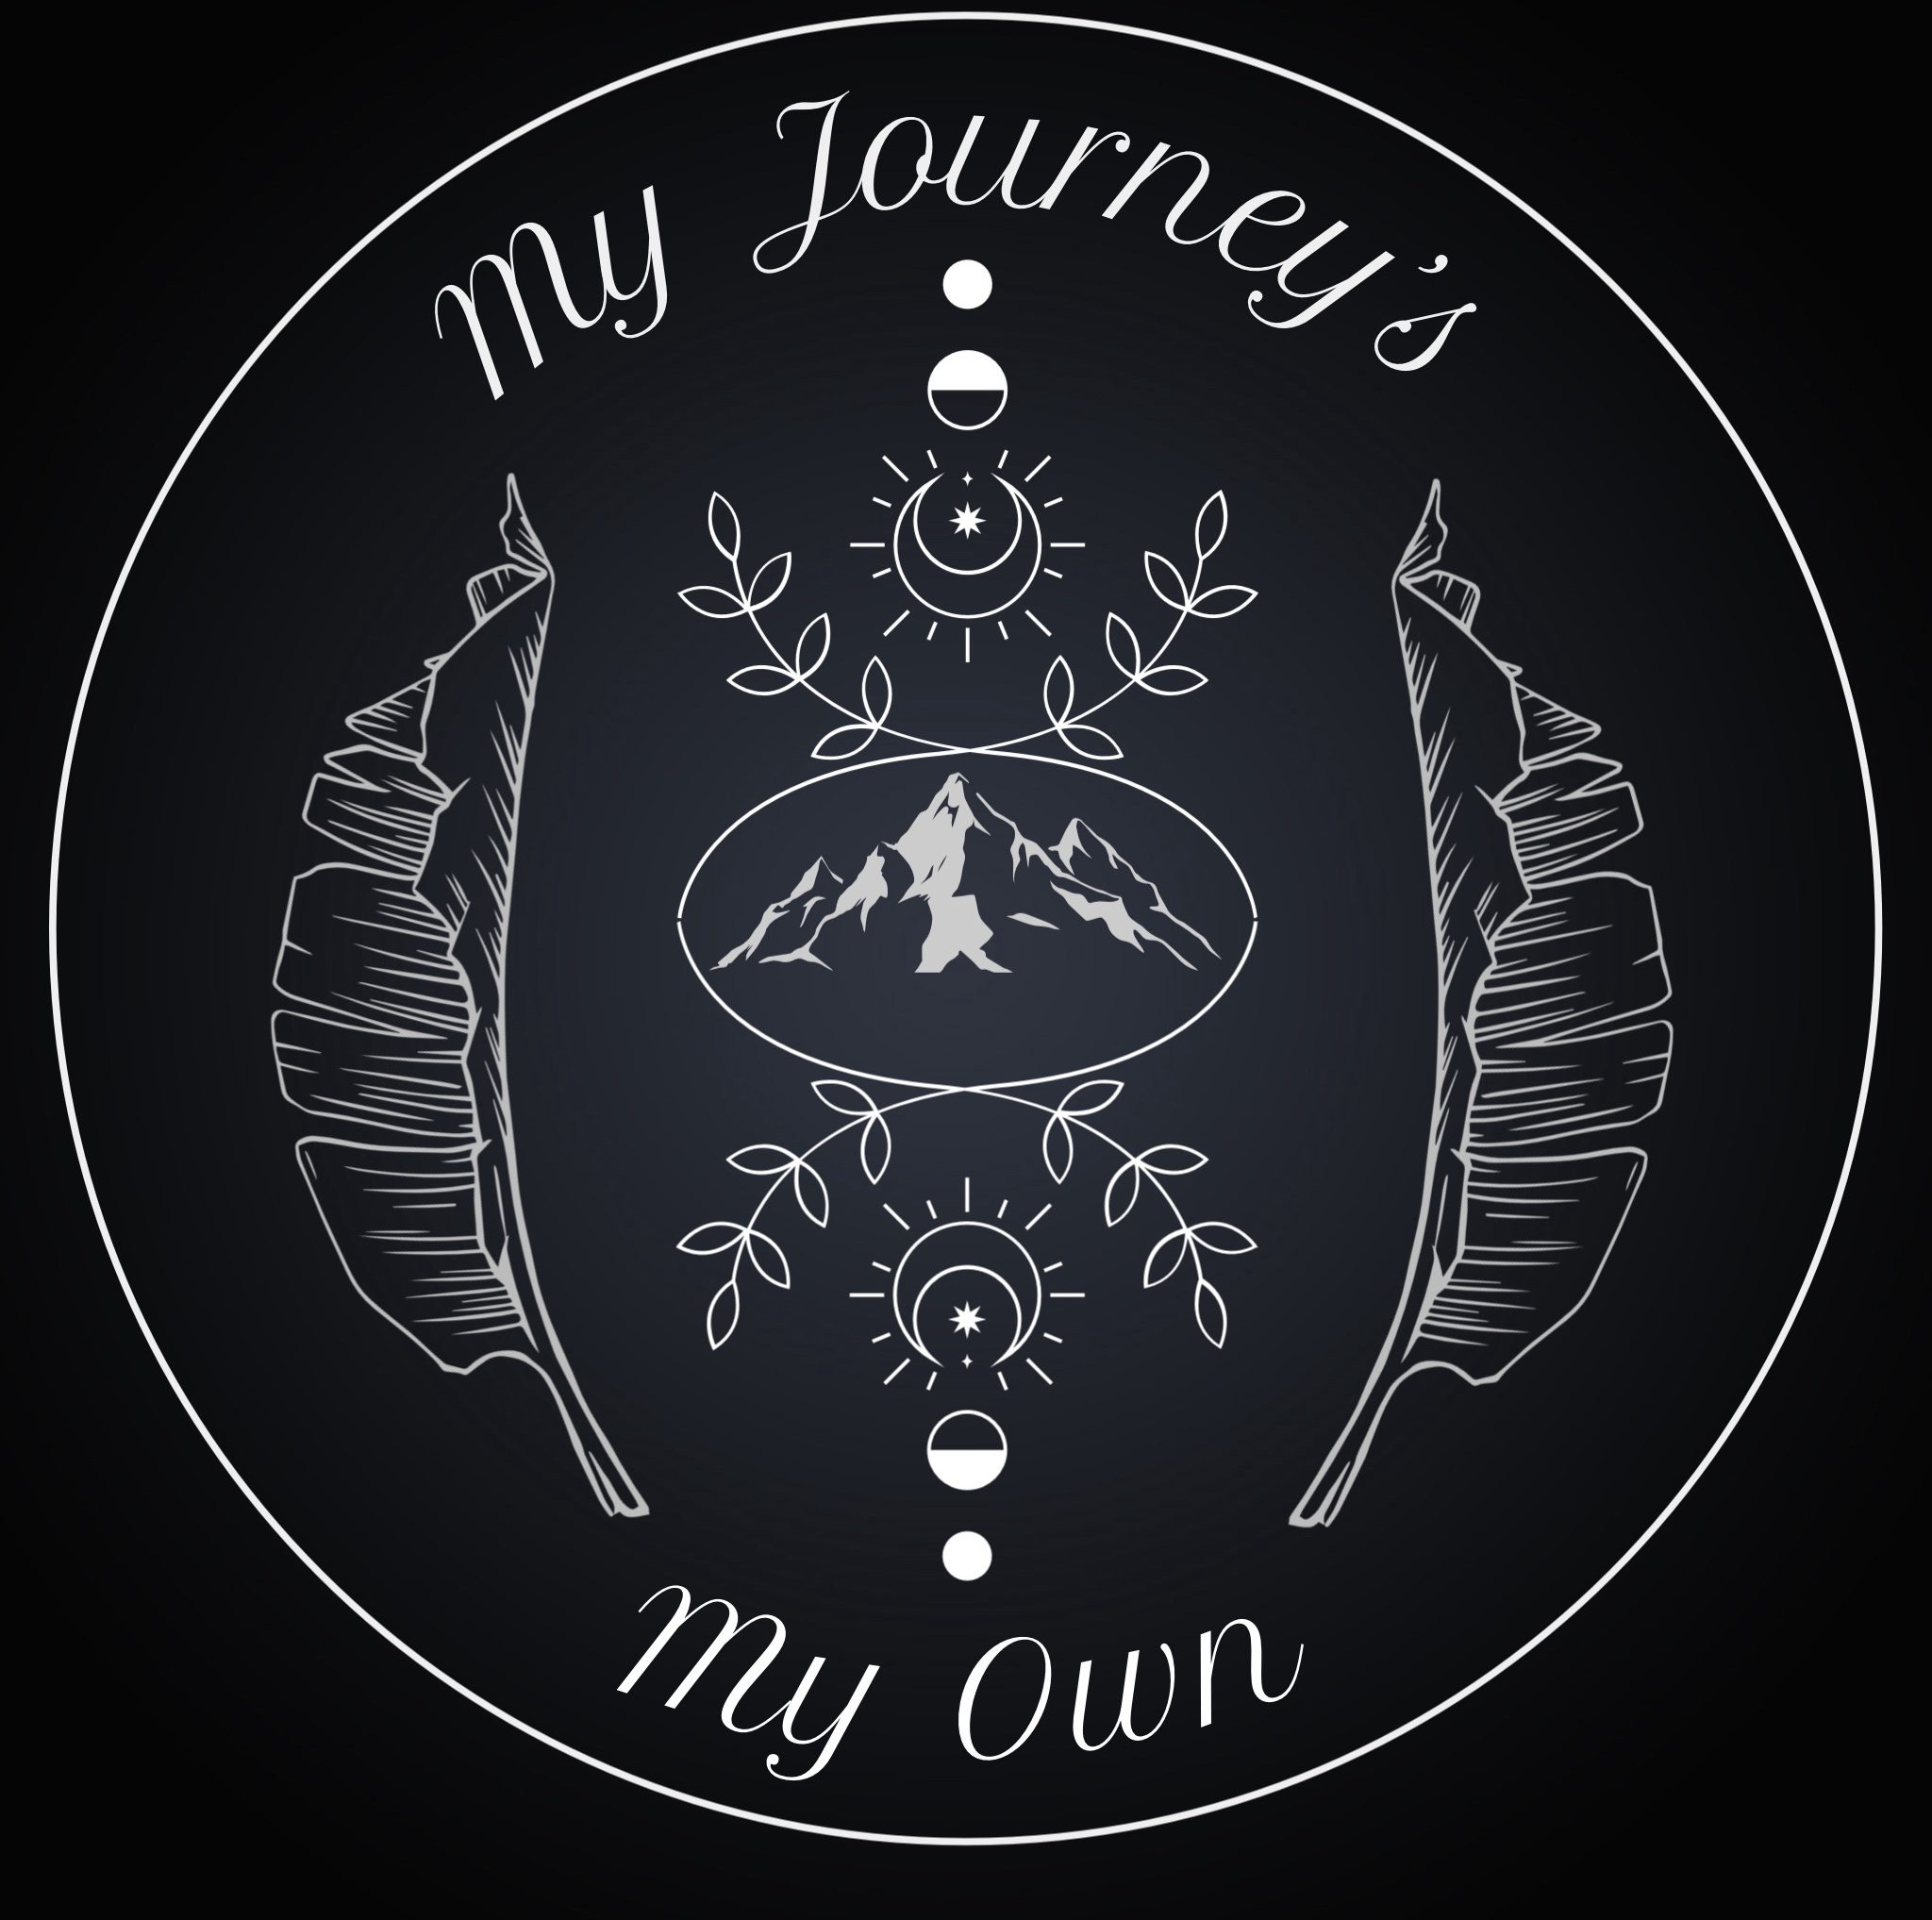 My Journey’s My Own